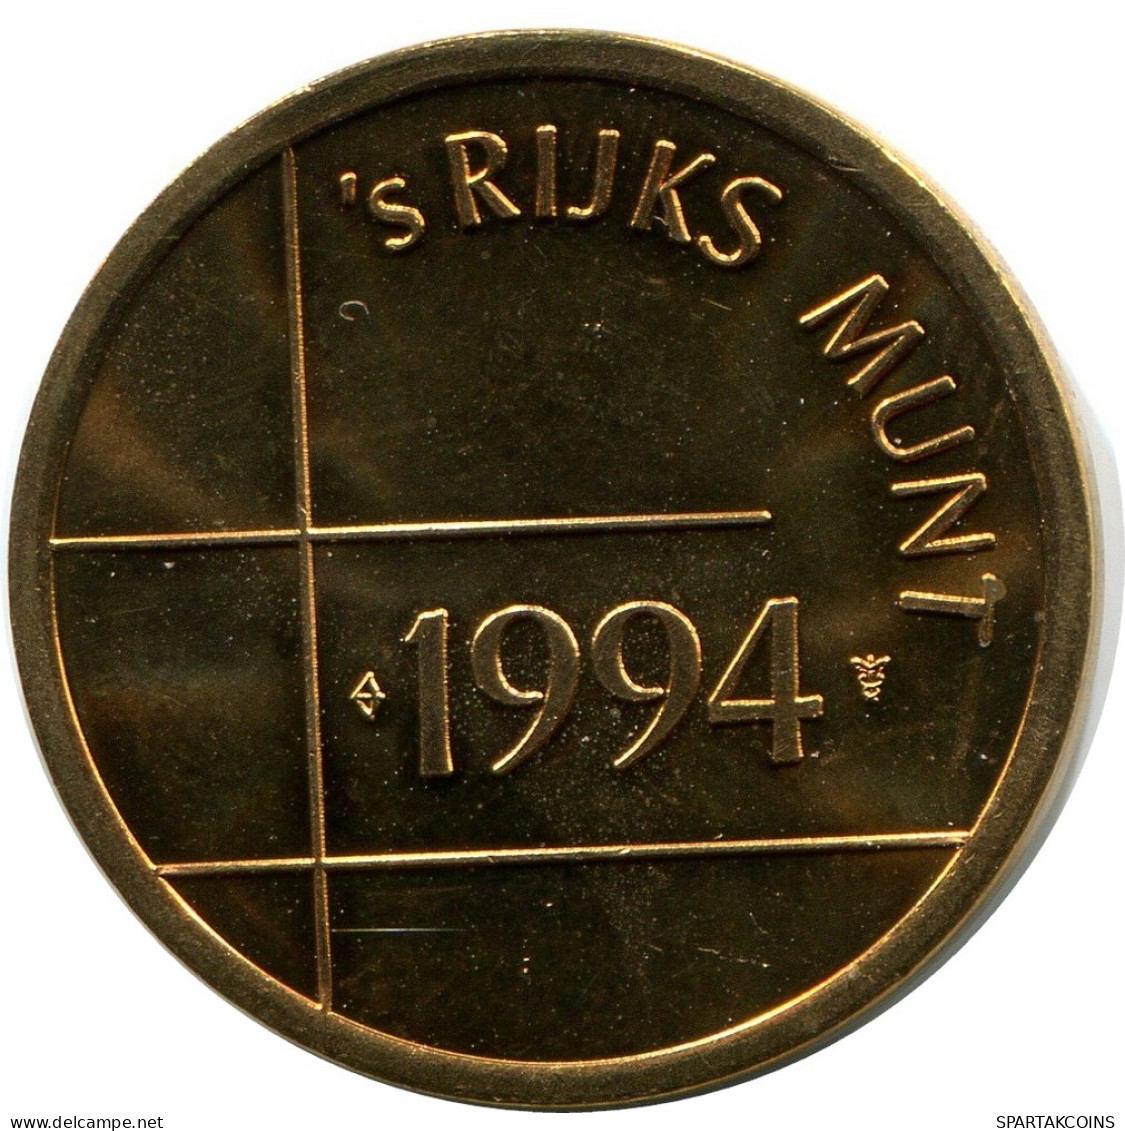 1994 ROYAL DUTCH MINT SET TOKEN NETHERLANDS MINT (From BU Mint Set) #AH031.U - Mint Sets & Proof Sets